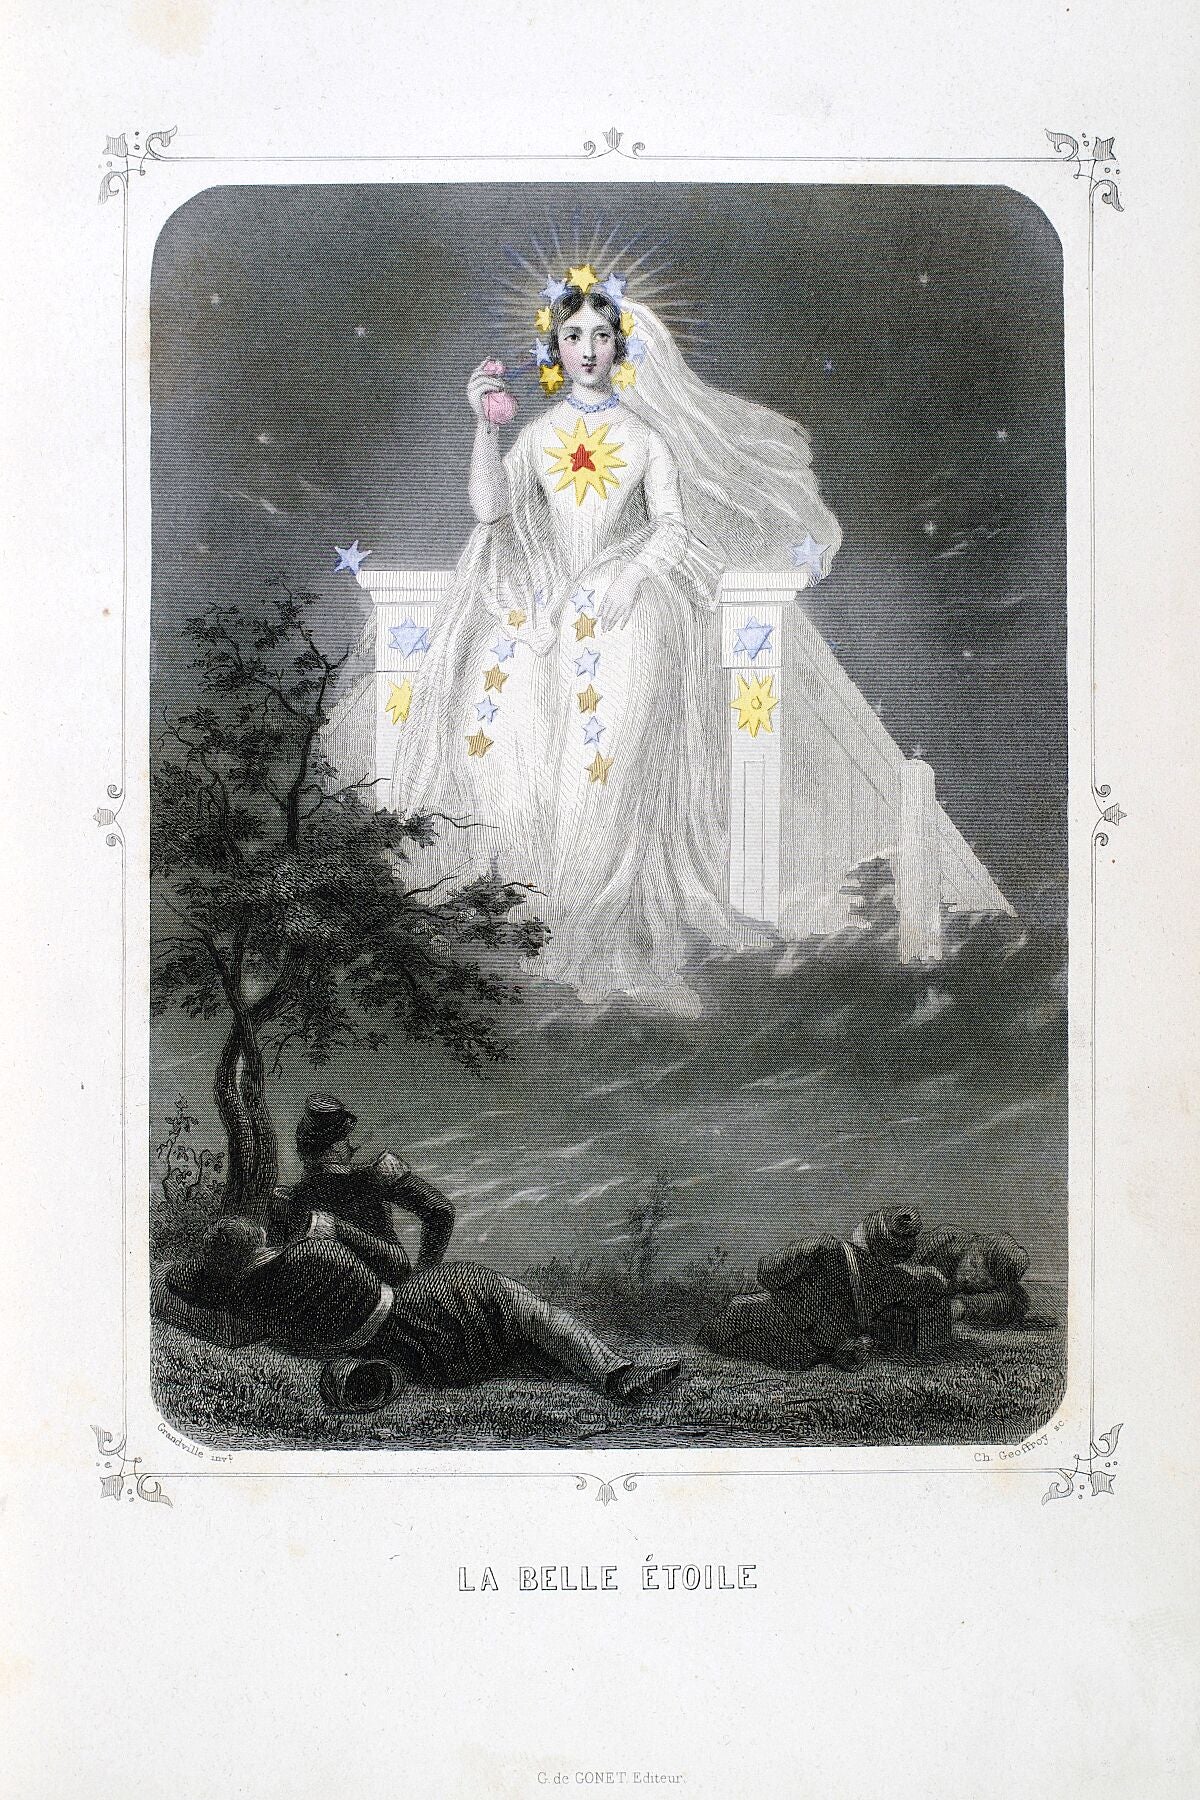 La Belle Etoile by JJ Grandville - 1849